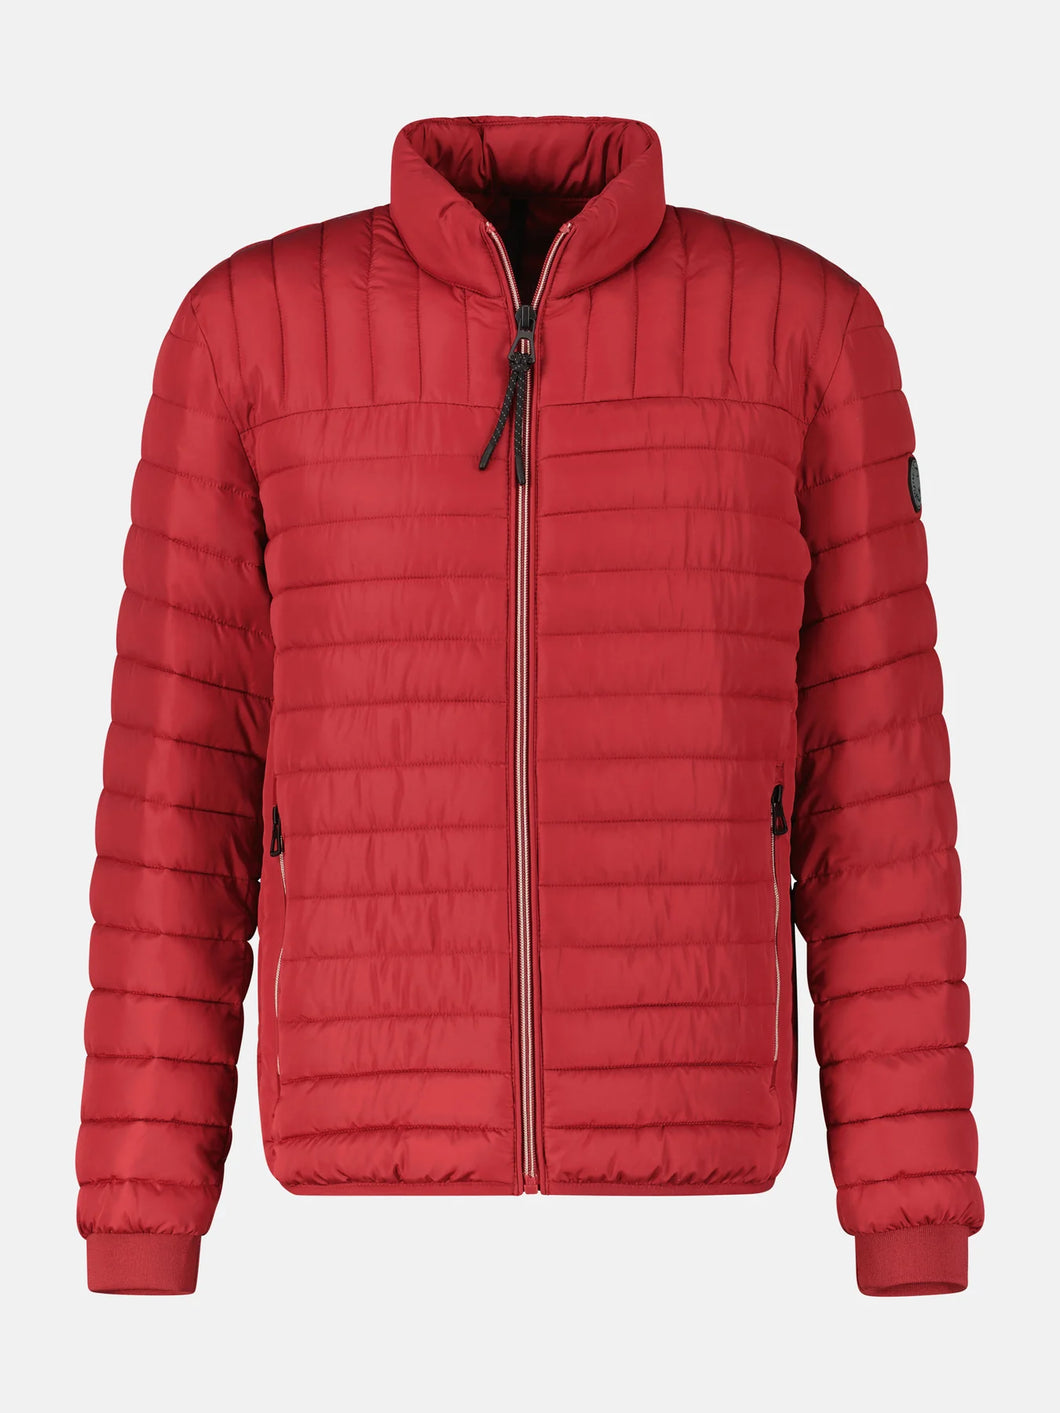 Lerros red jacket